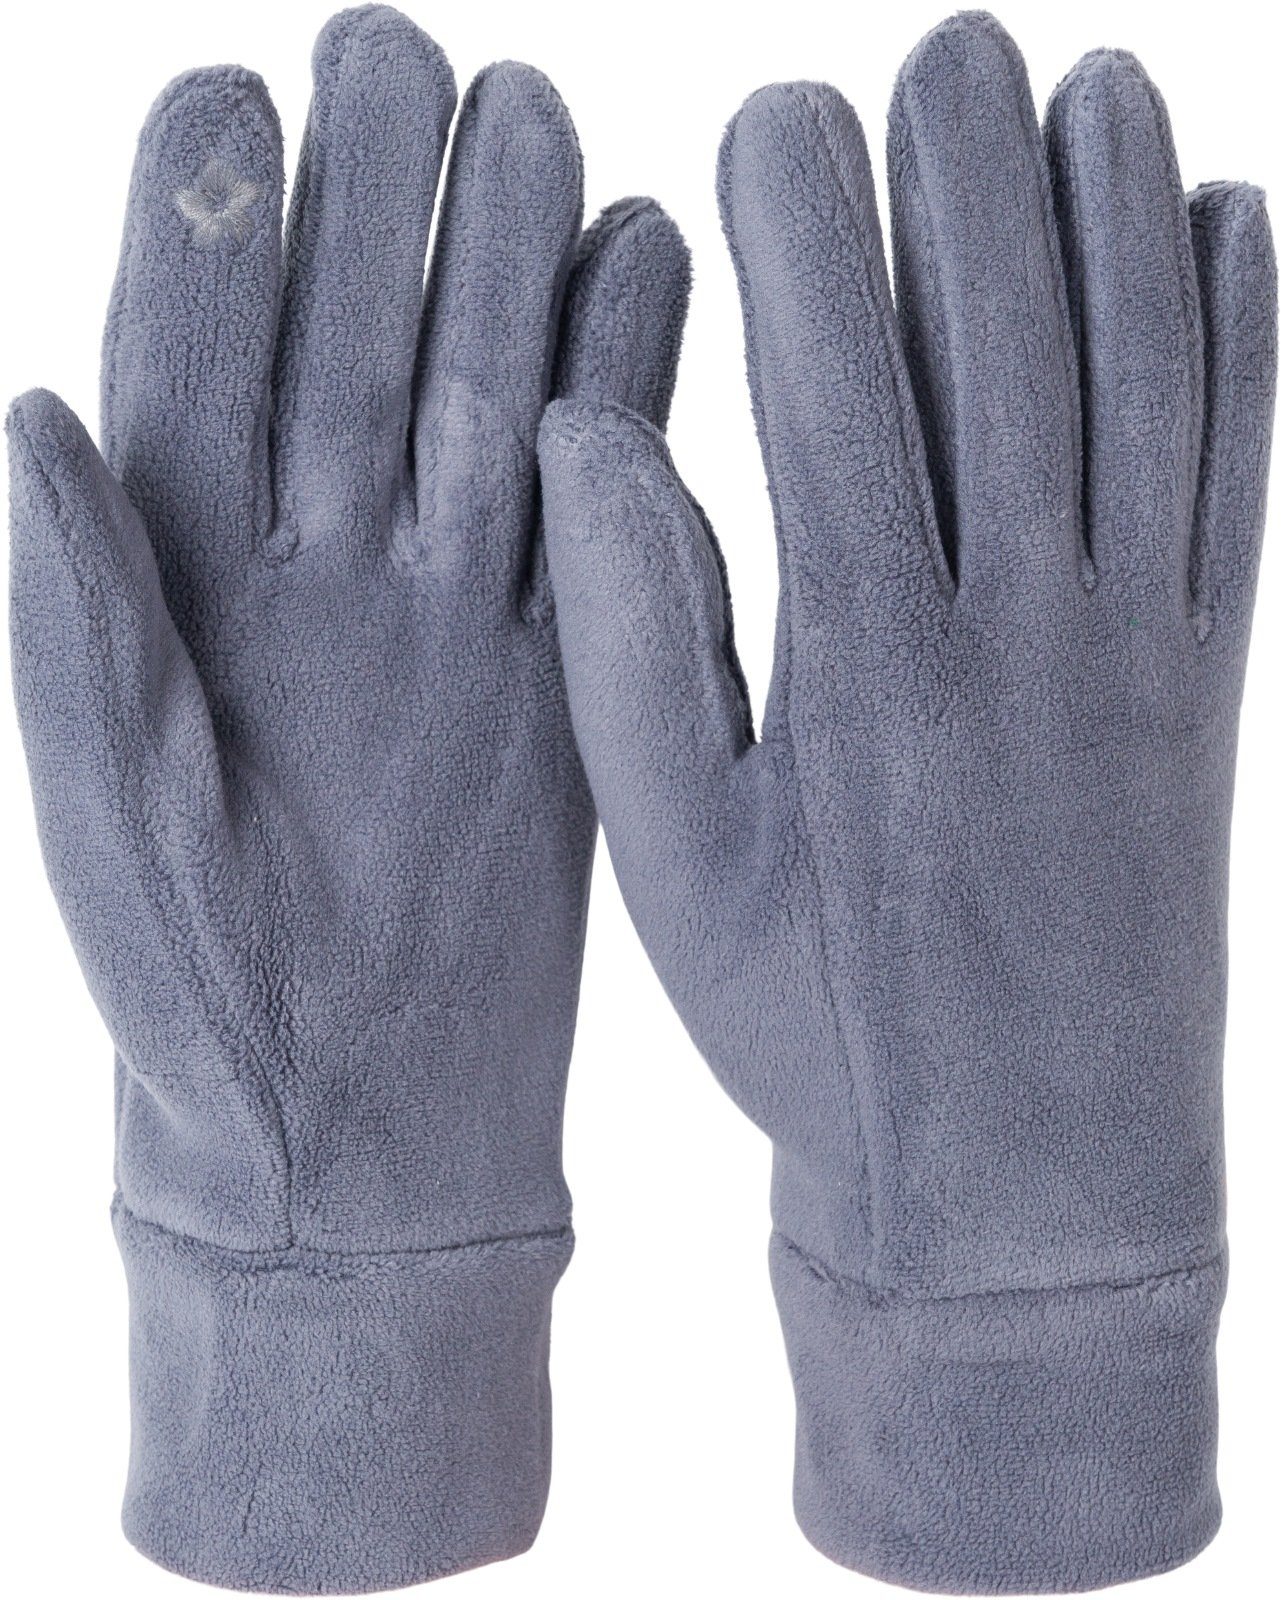 styleBREAKER Fleecehandschuhe Einfarbige Touchscreen Dunkelgrau Handschuhe Fleece